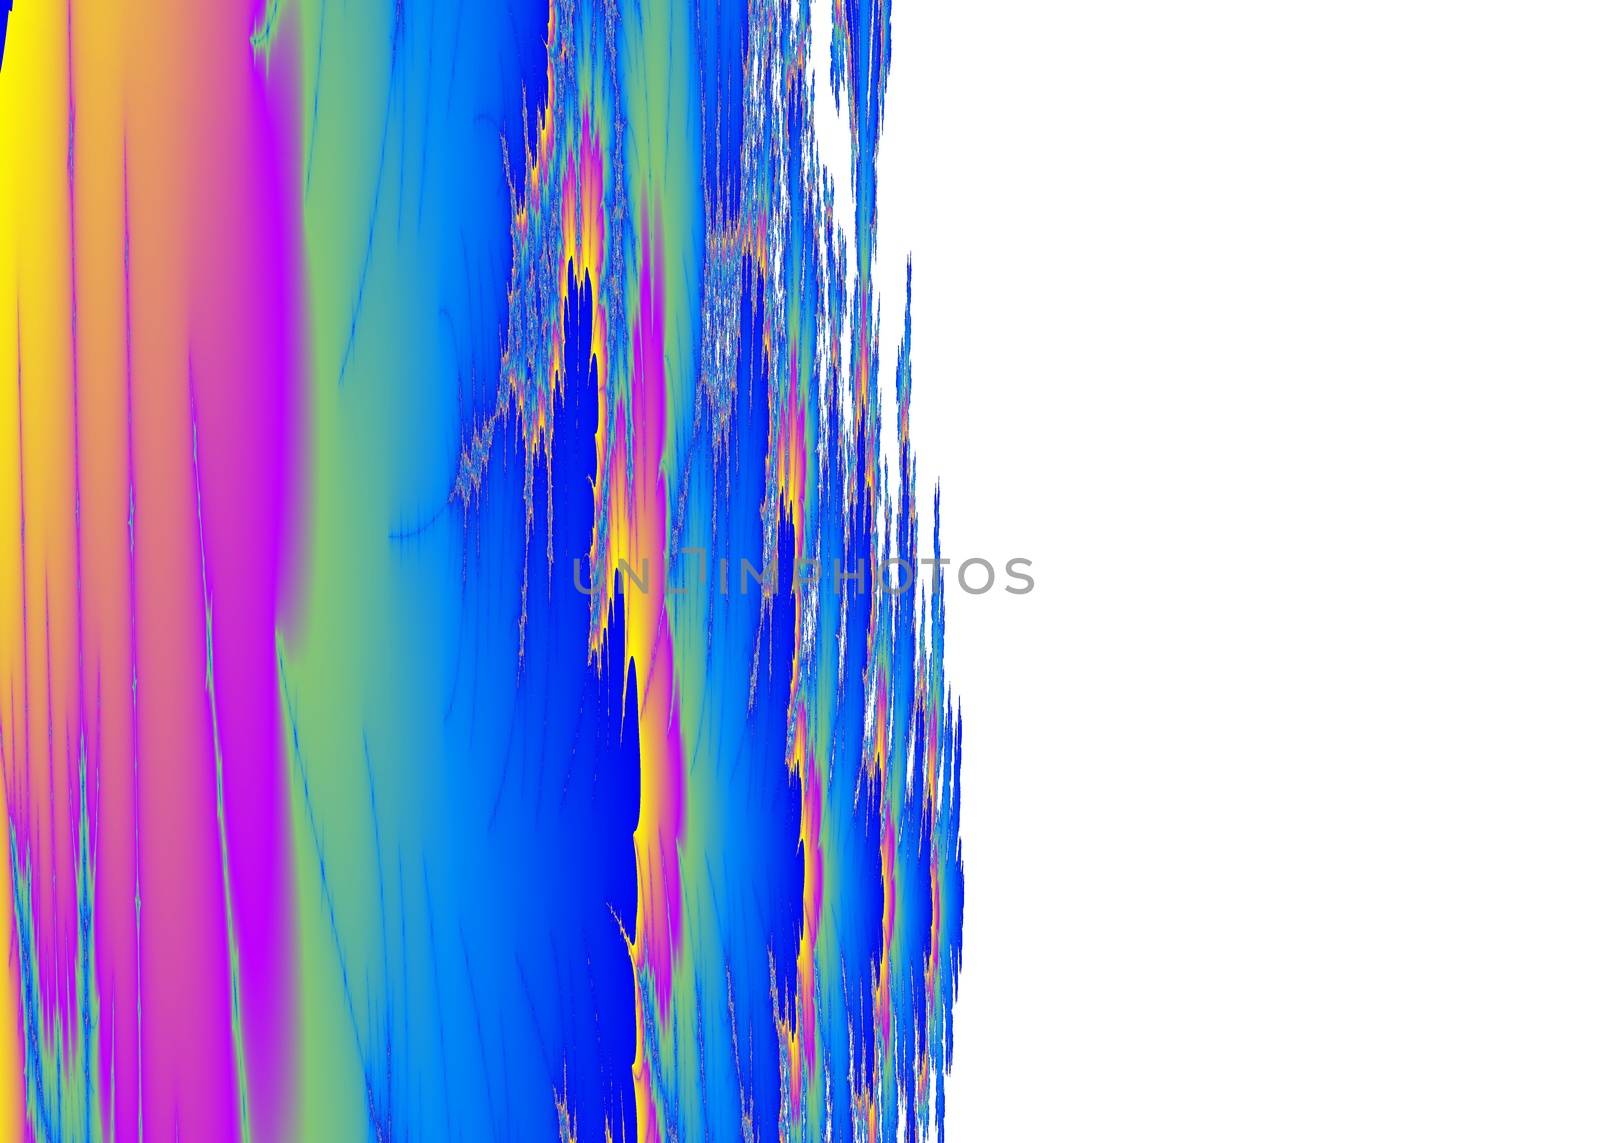 Rainbow Brush Strokes on White Background - Abstract Illustration, Image